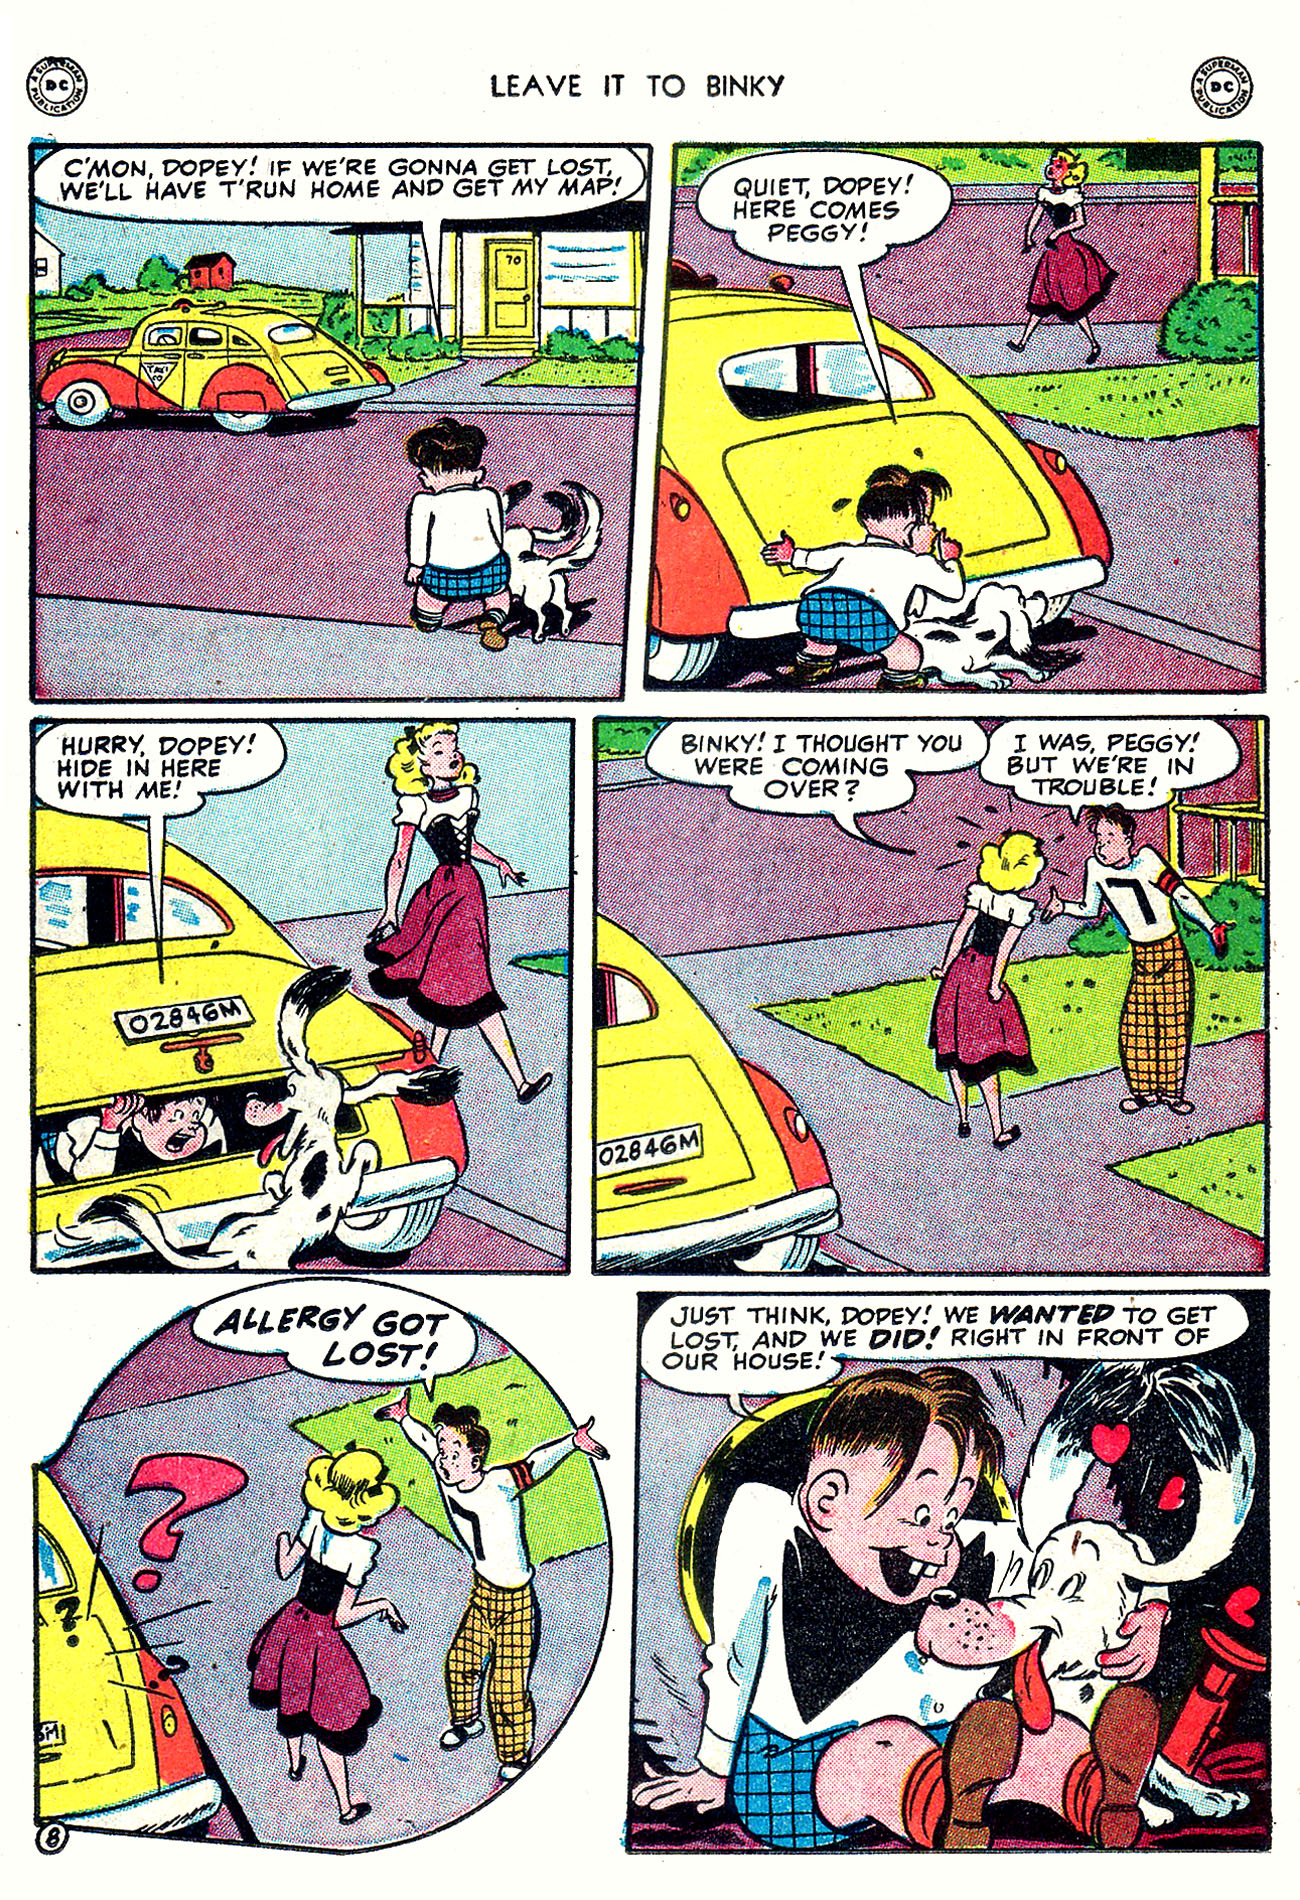 Read online Leave it to Binky comic -  Issue #6 - 26